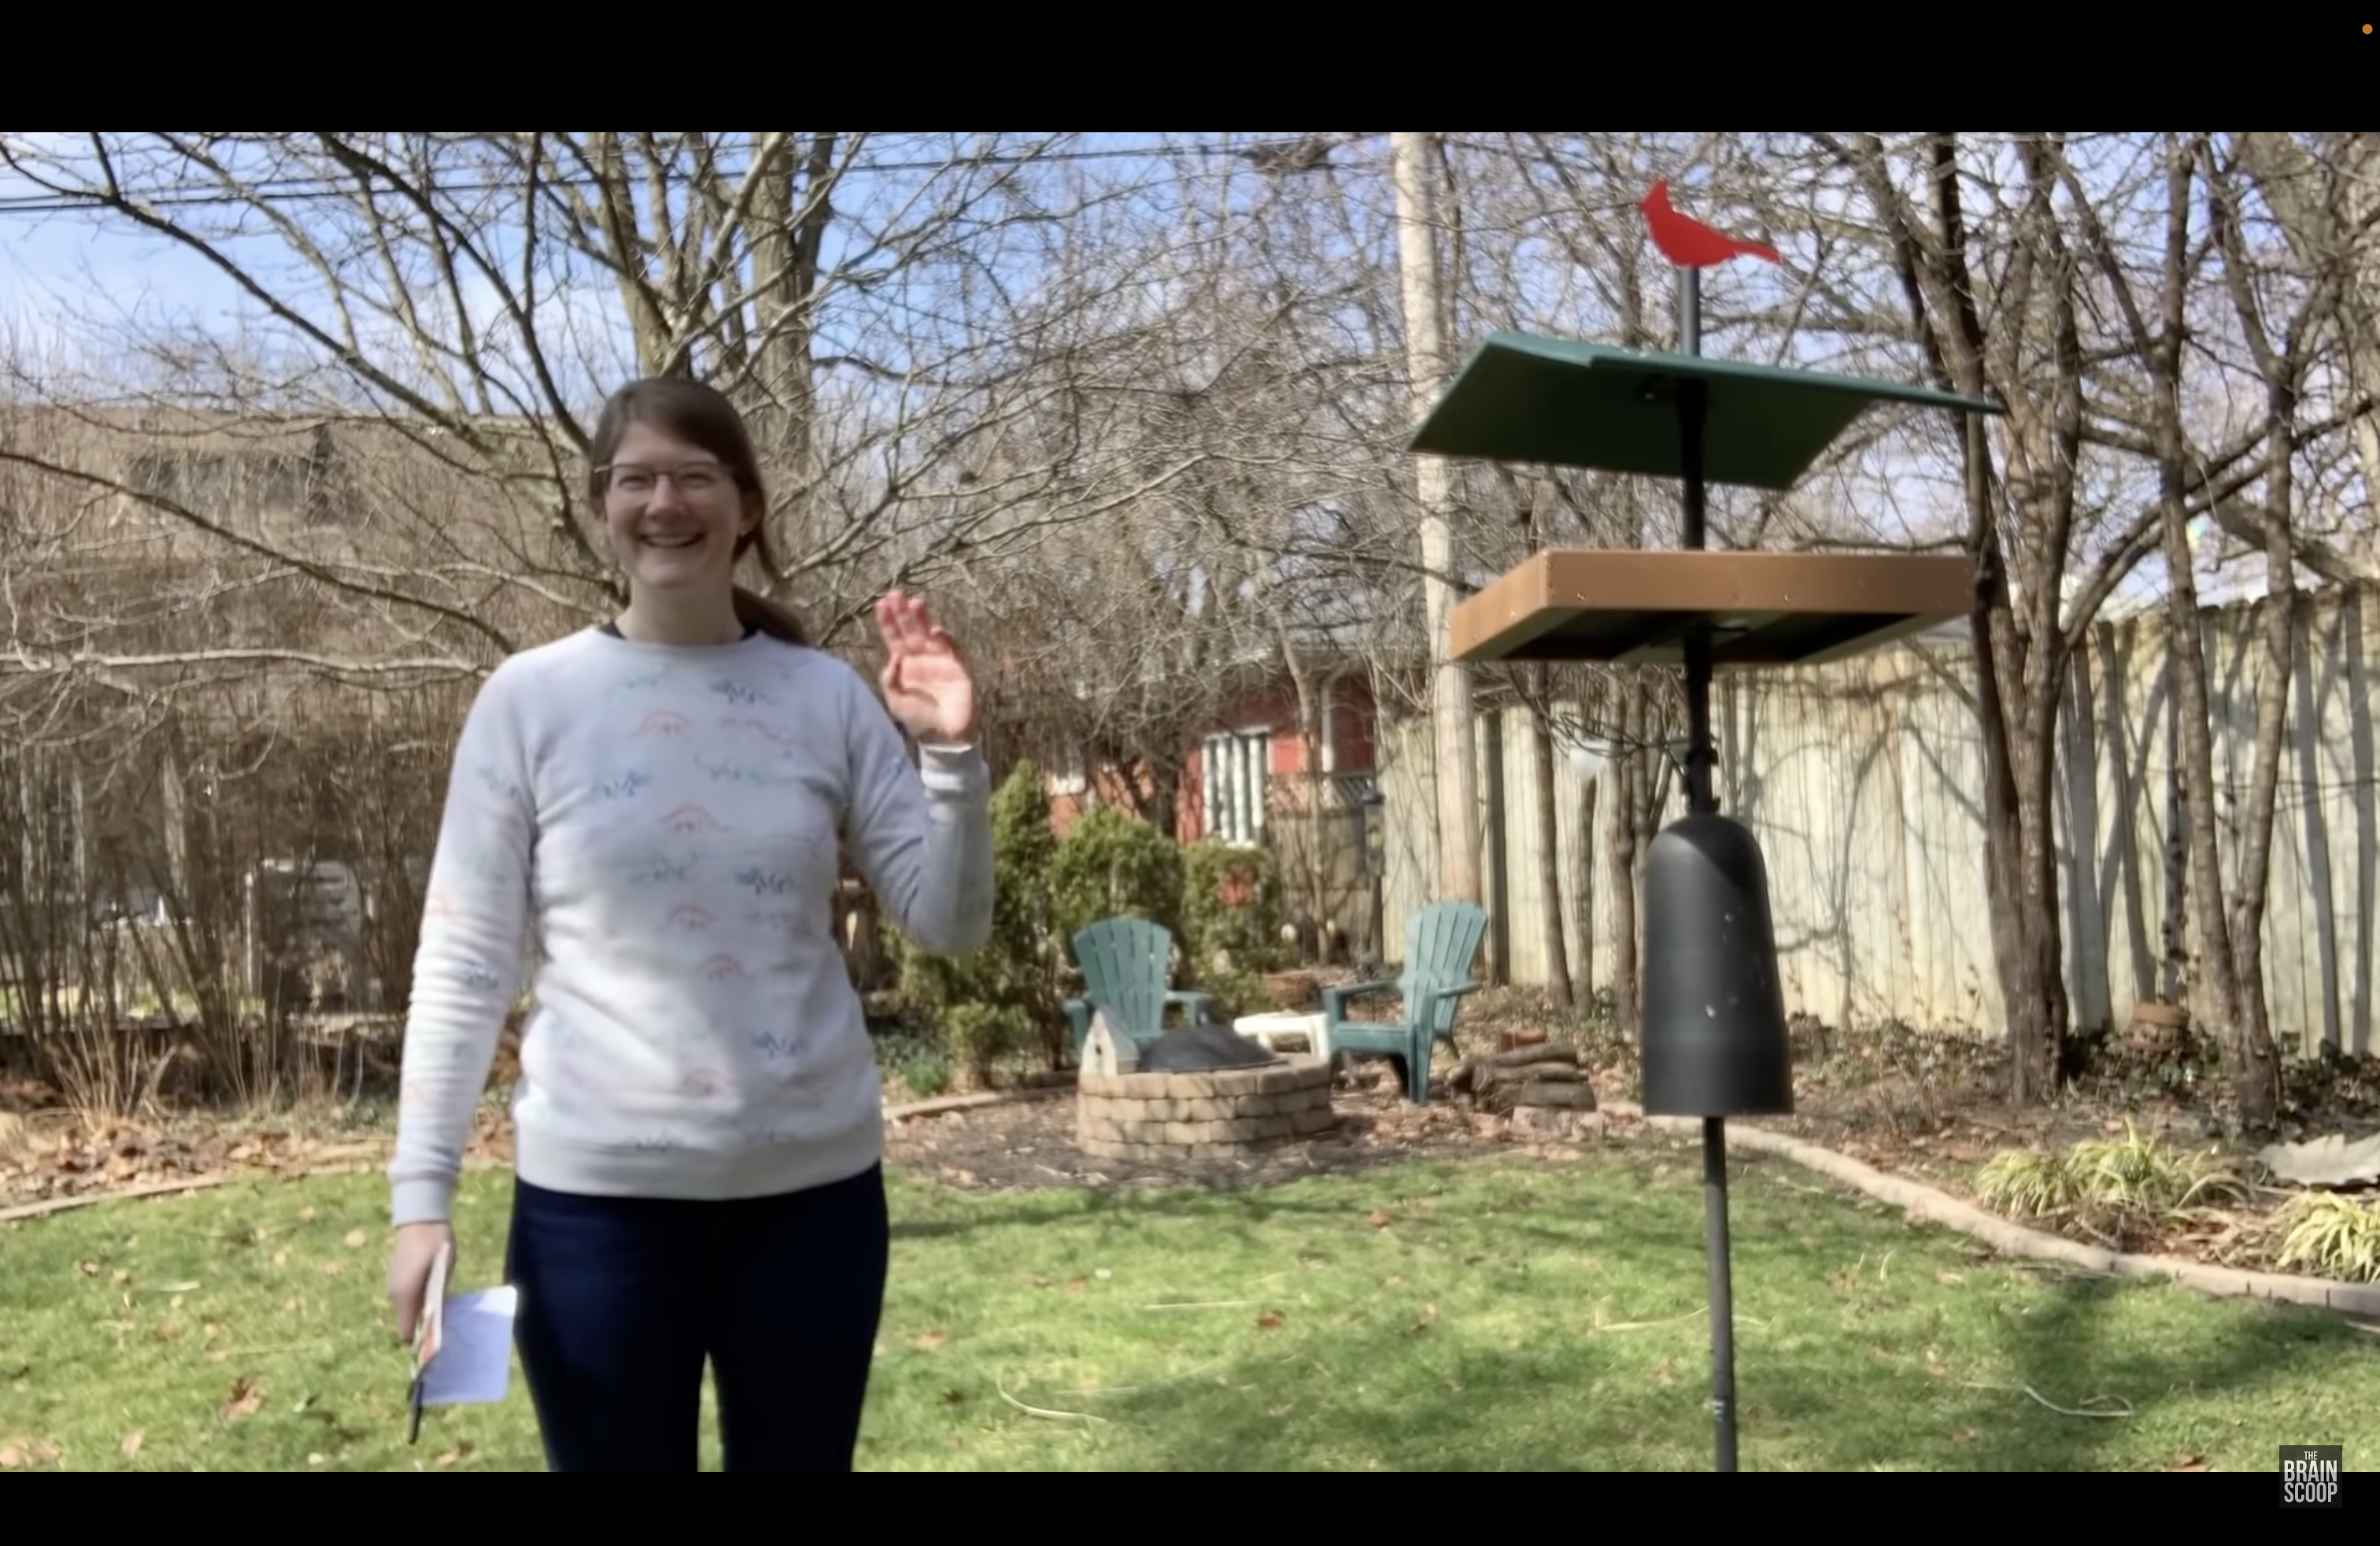 A woman stands in a backyard next to a birdfeeder.